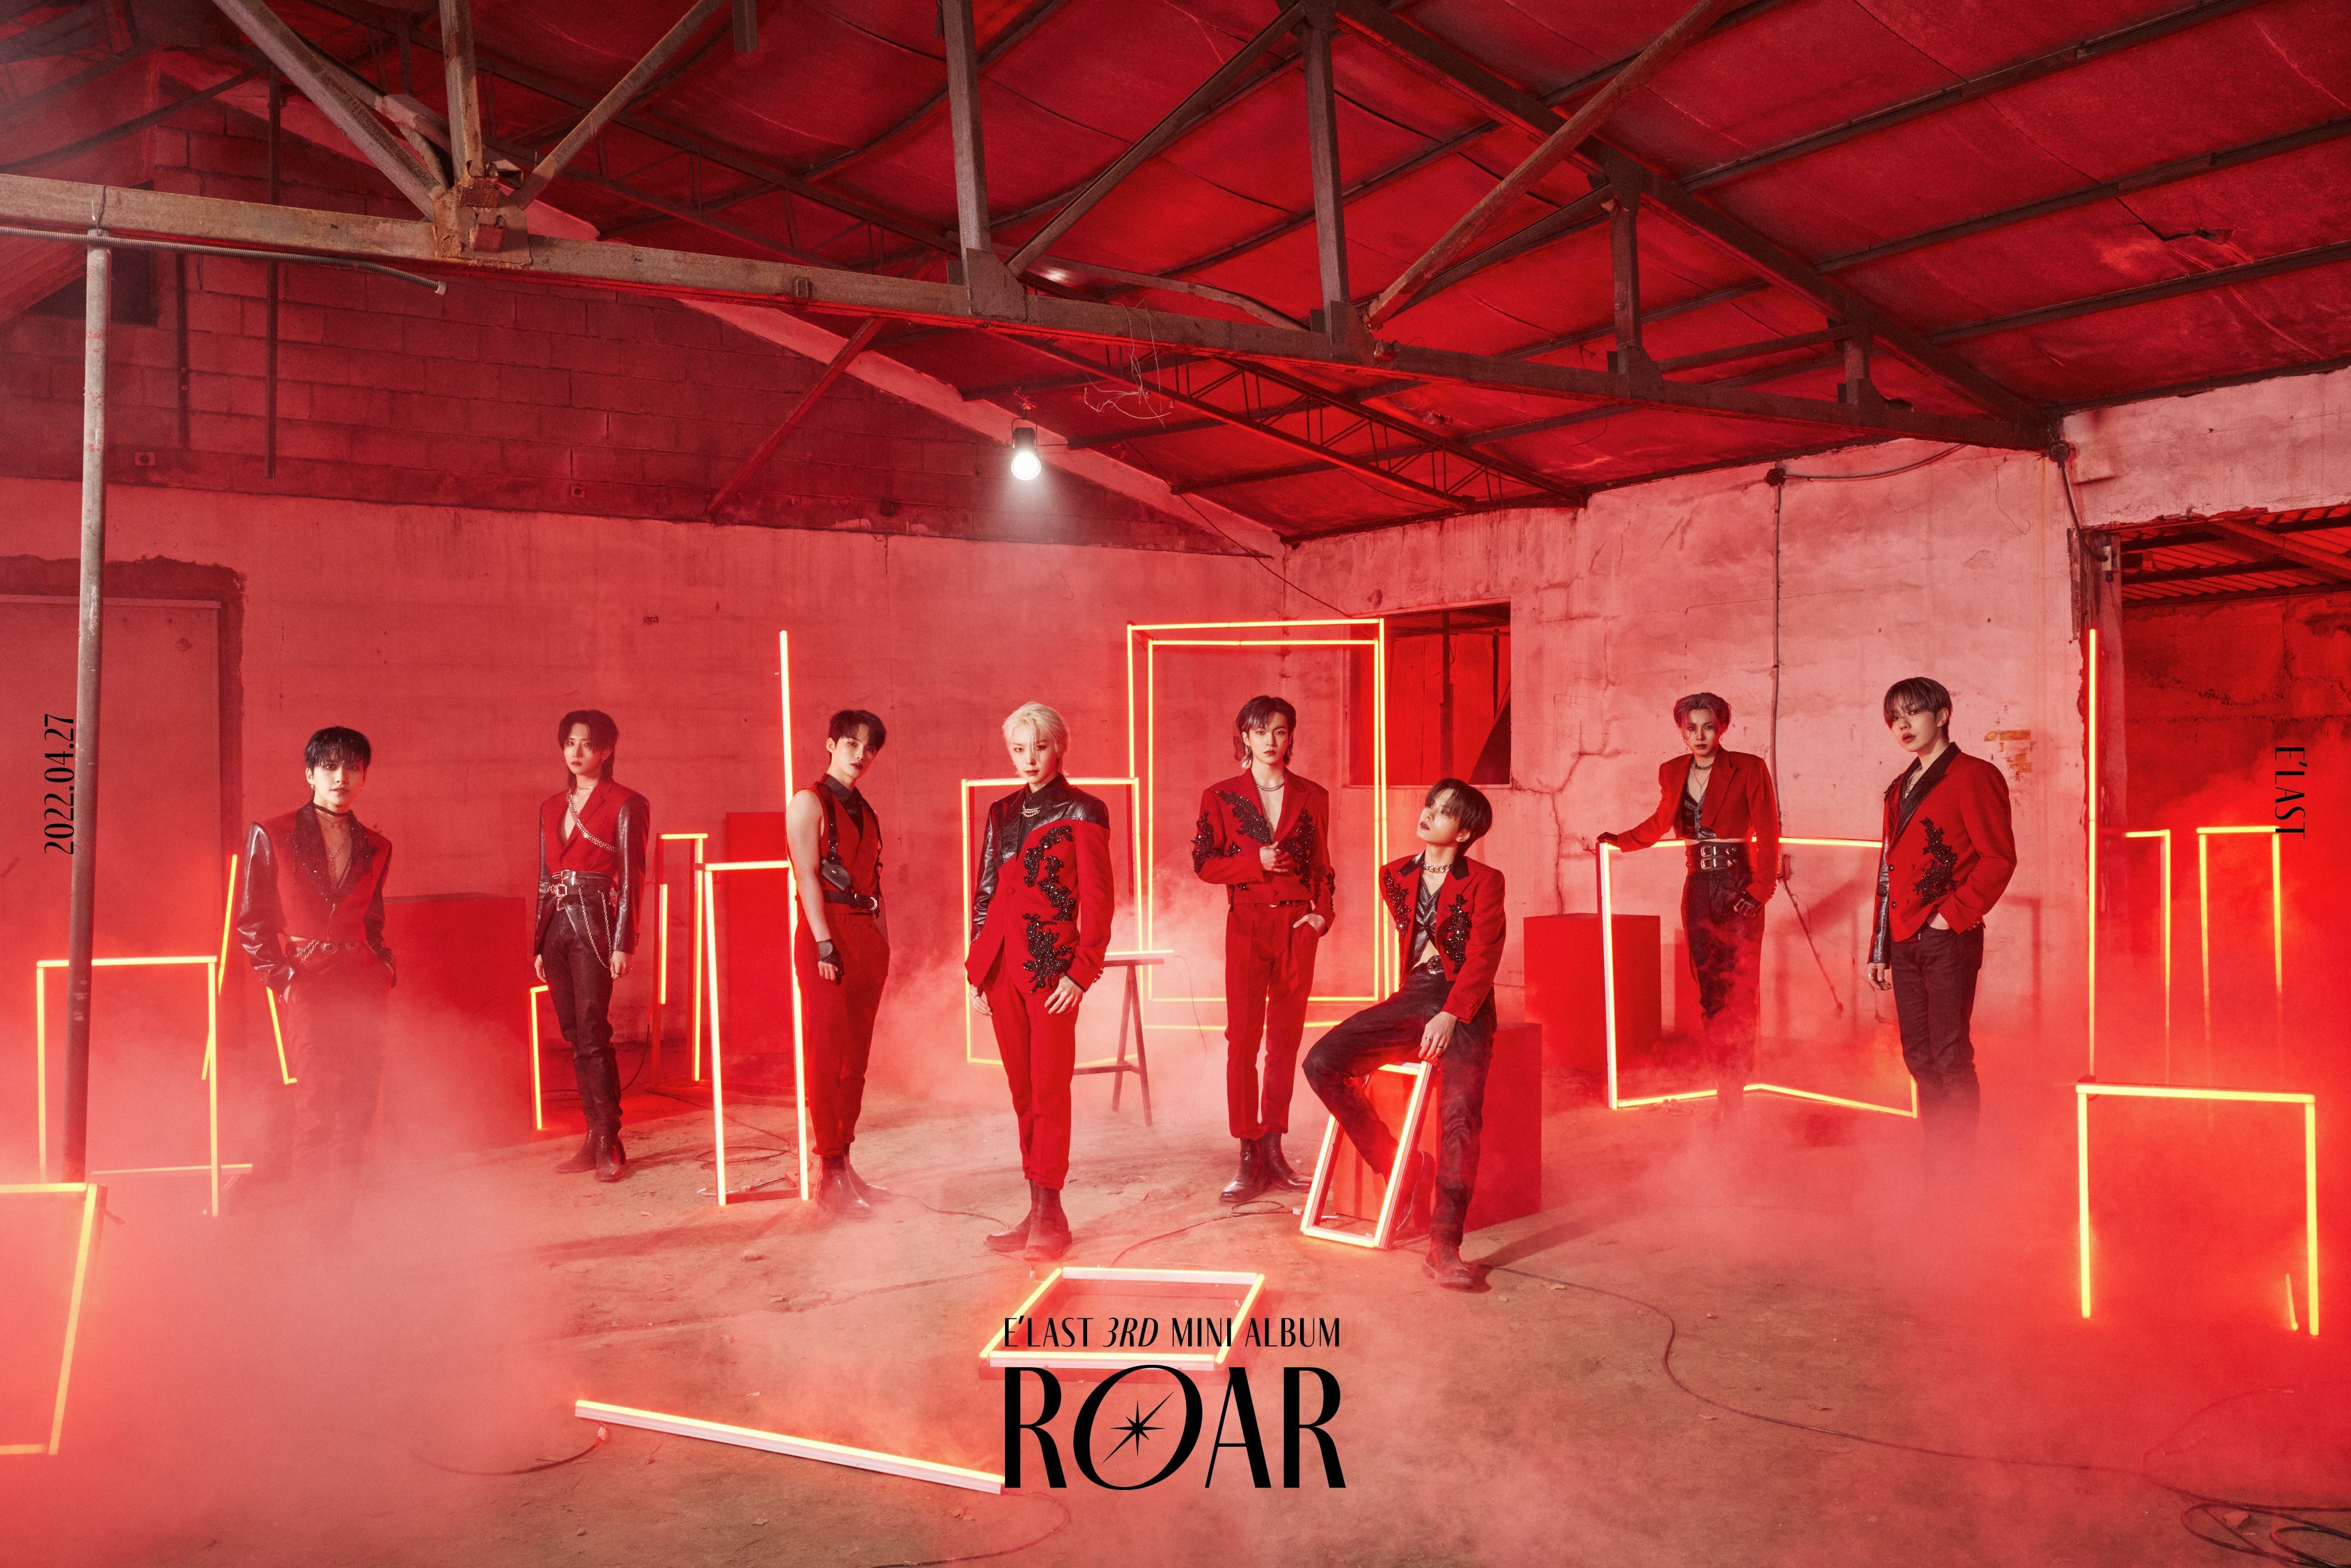 3rd Mini Album [ROAR] - Album by E'LAST